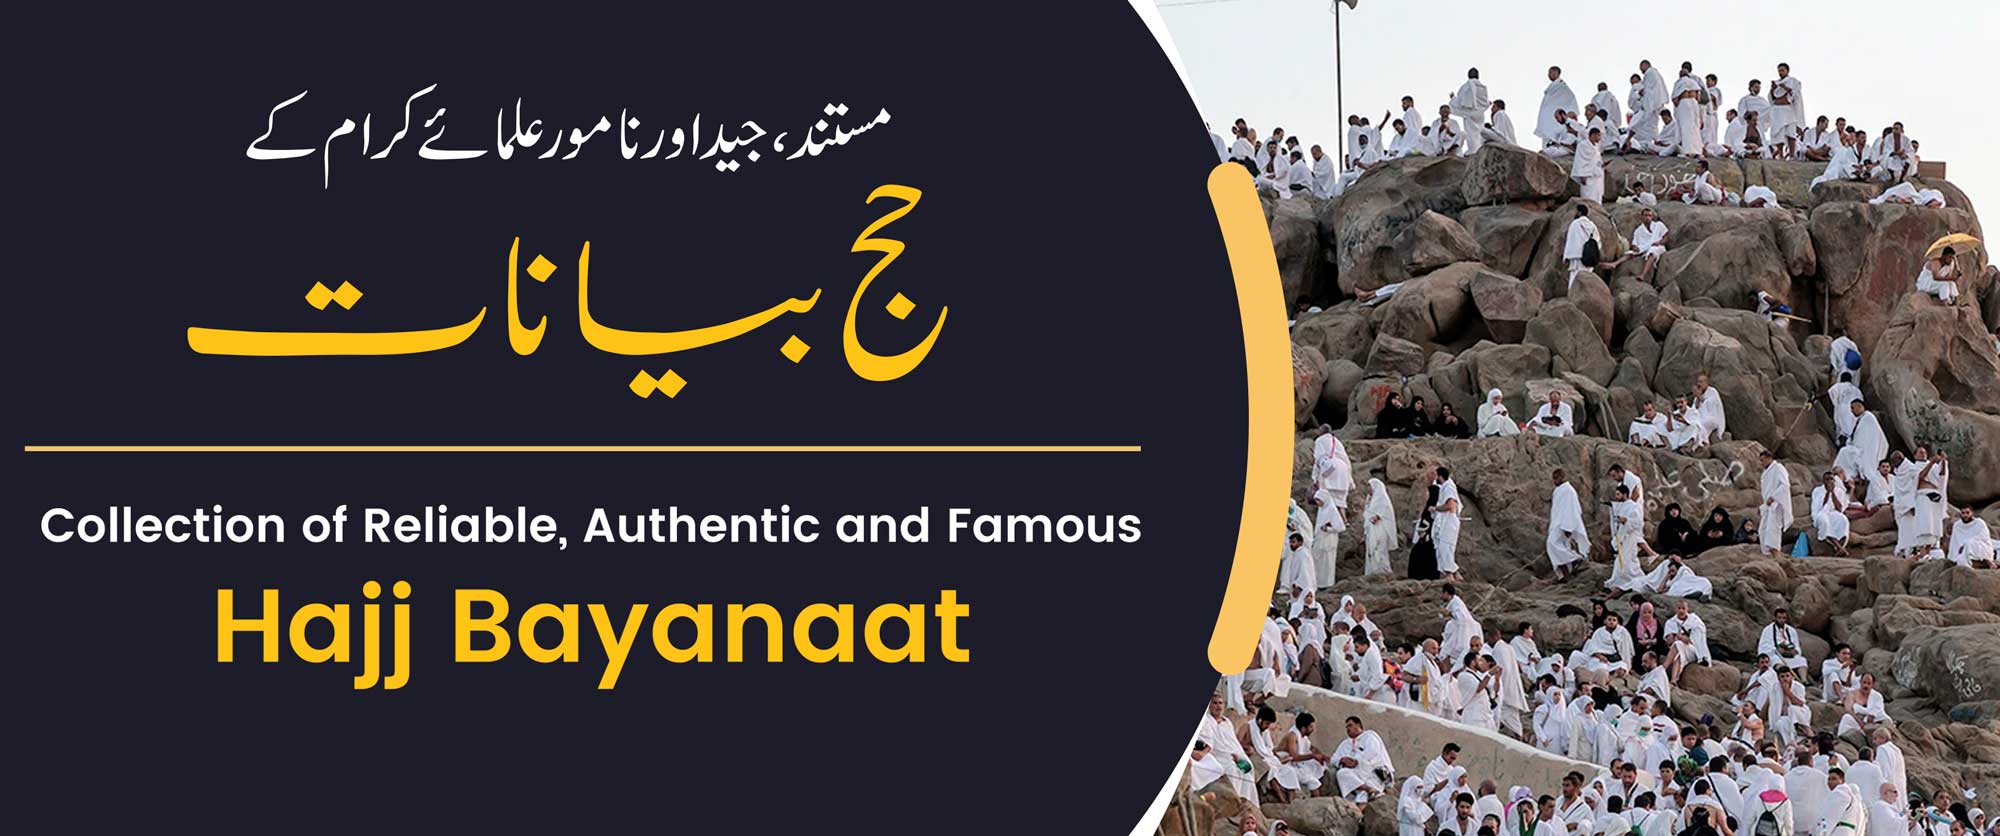 Collection of Hajj Bayanaat